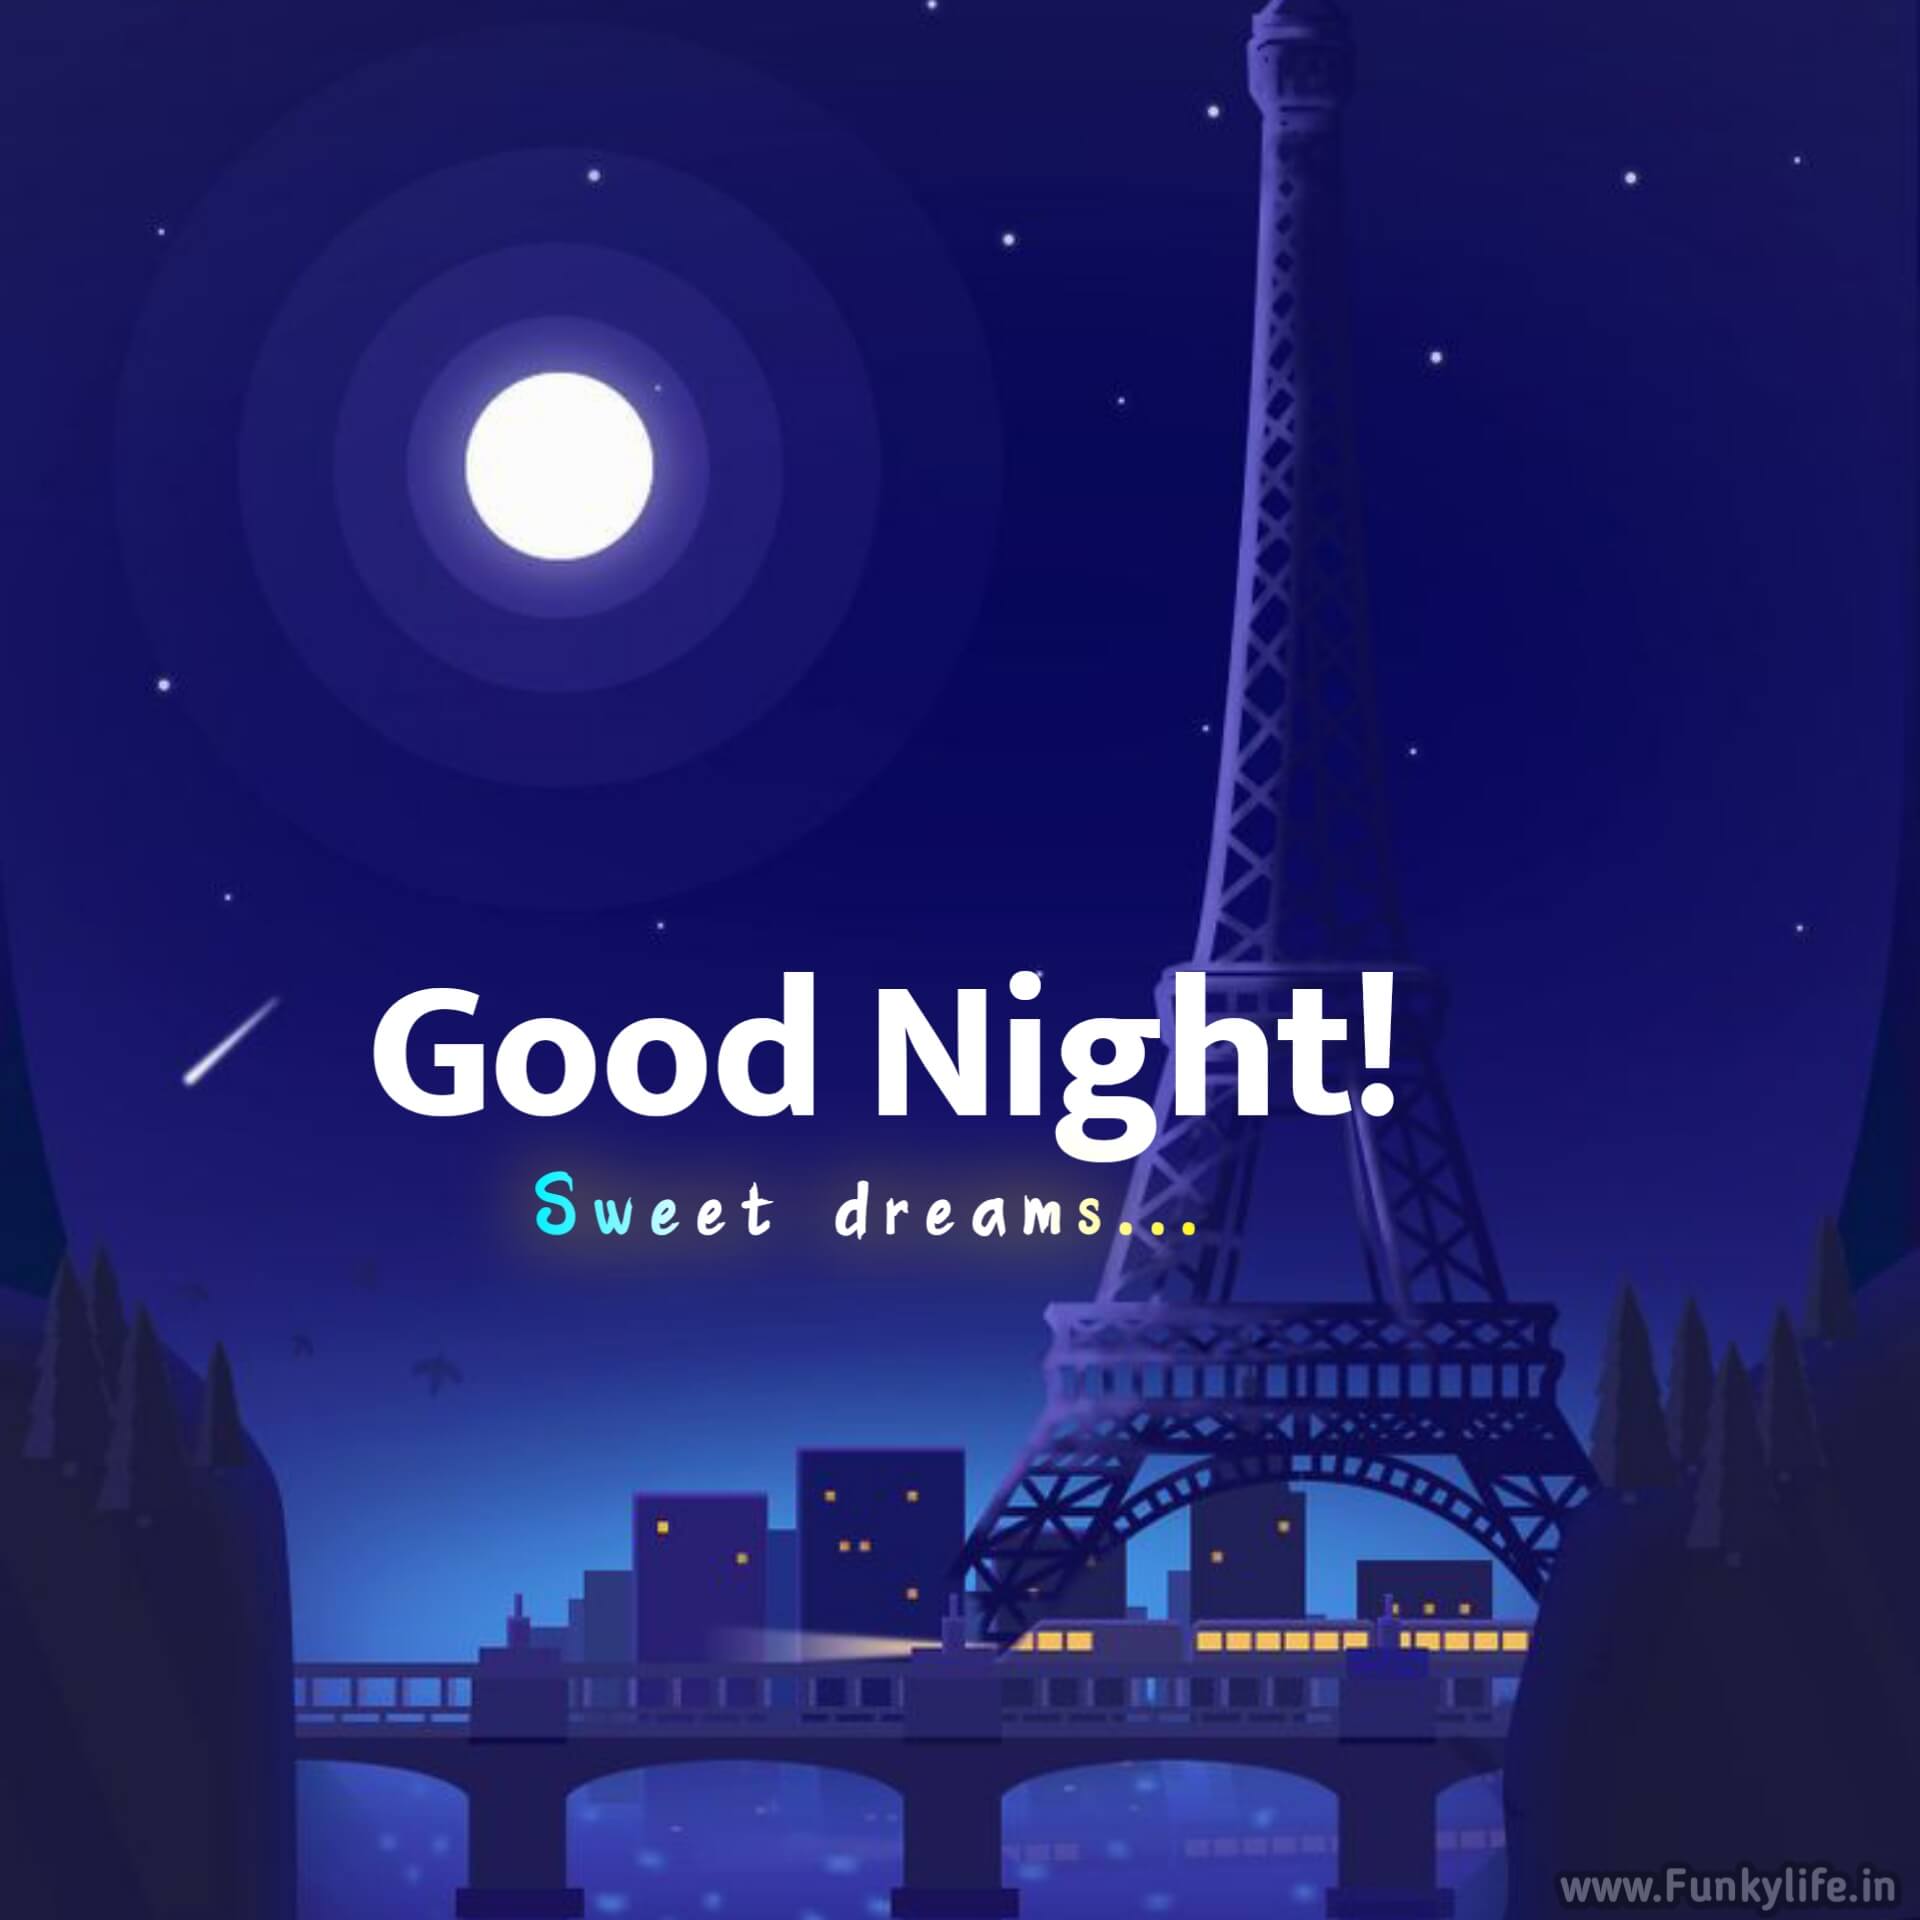 Good night sweet dreams image